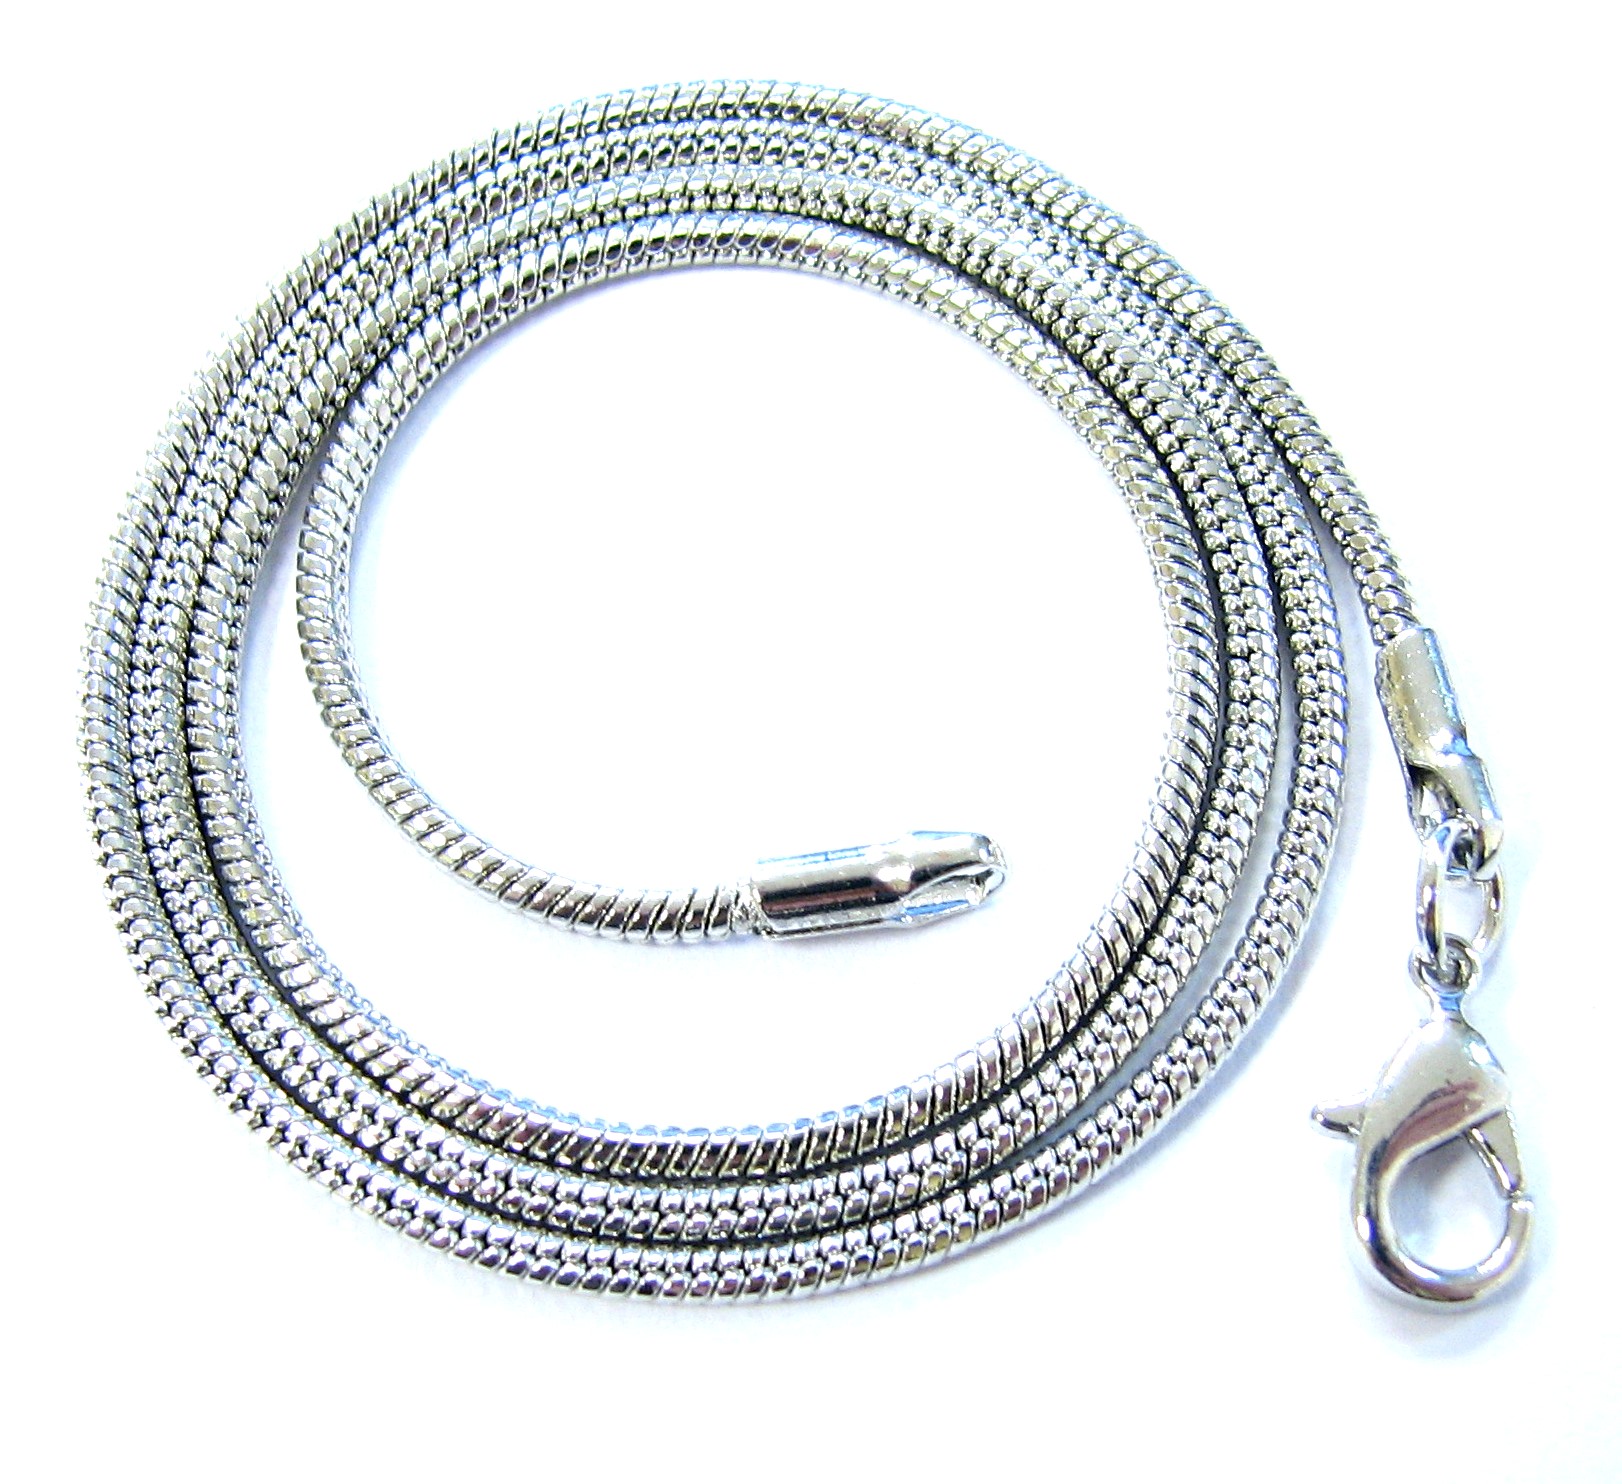 necklaces + bracelets: rubber, steelwire, metal